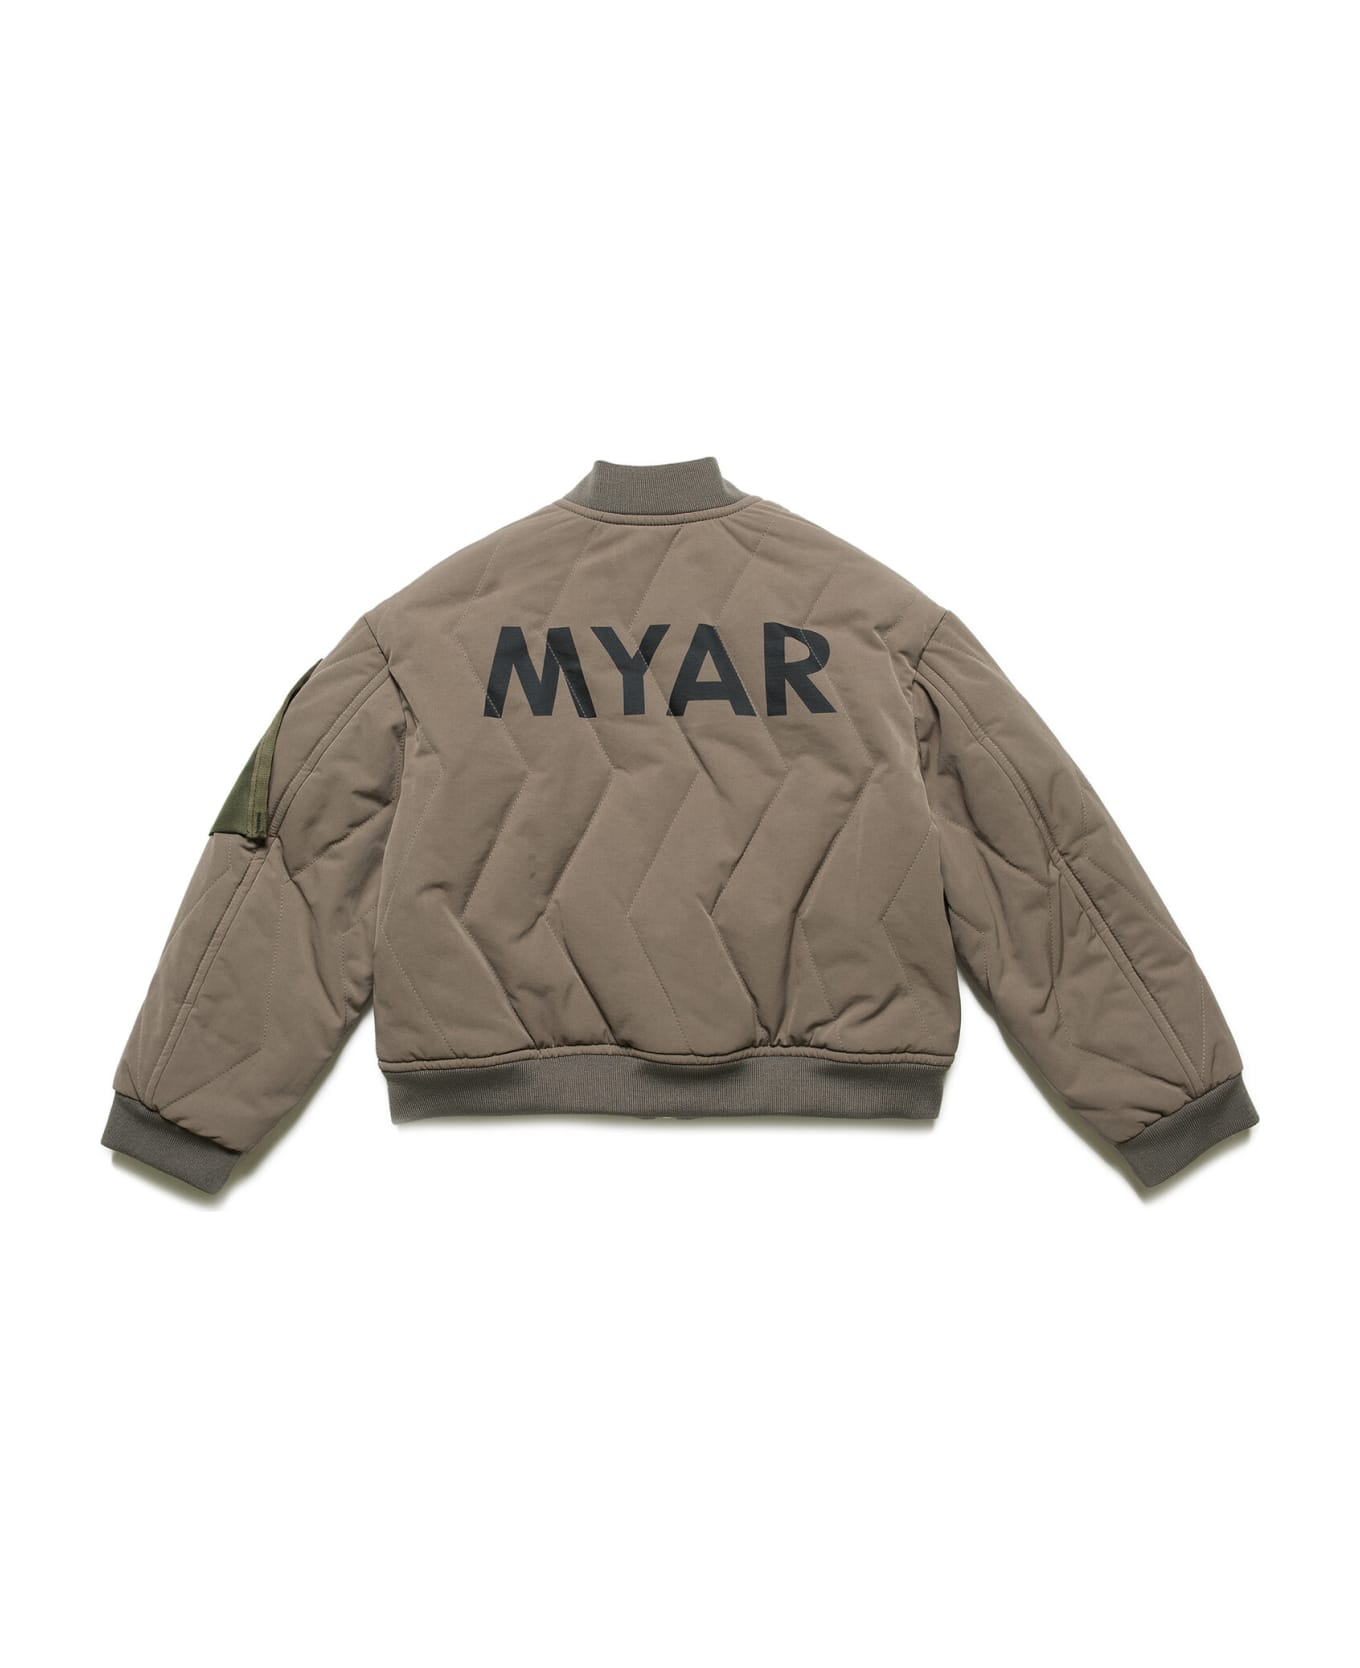 MYAR Myj6u Jacket Myar - Brownish green